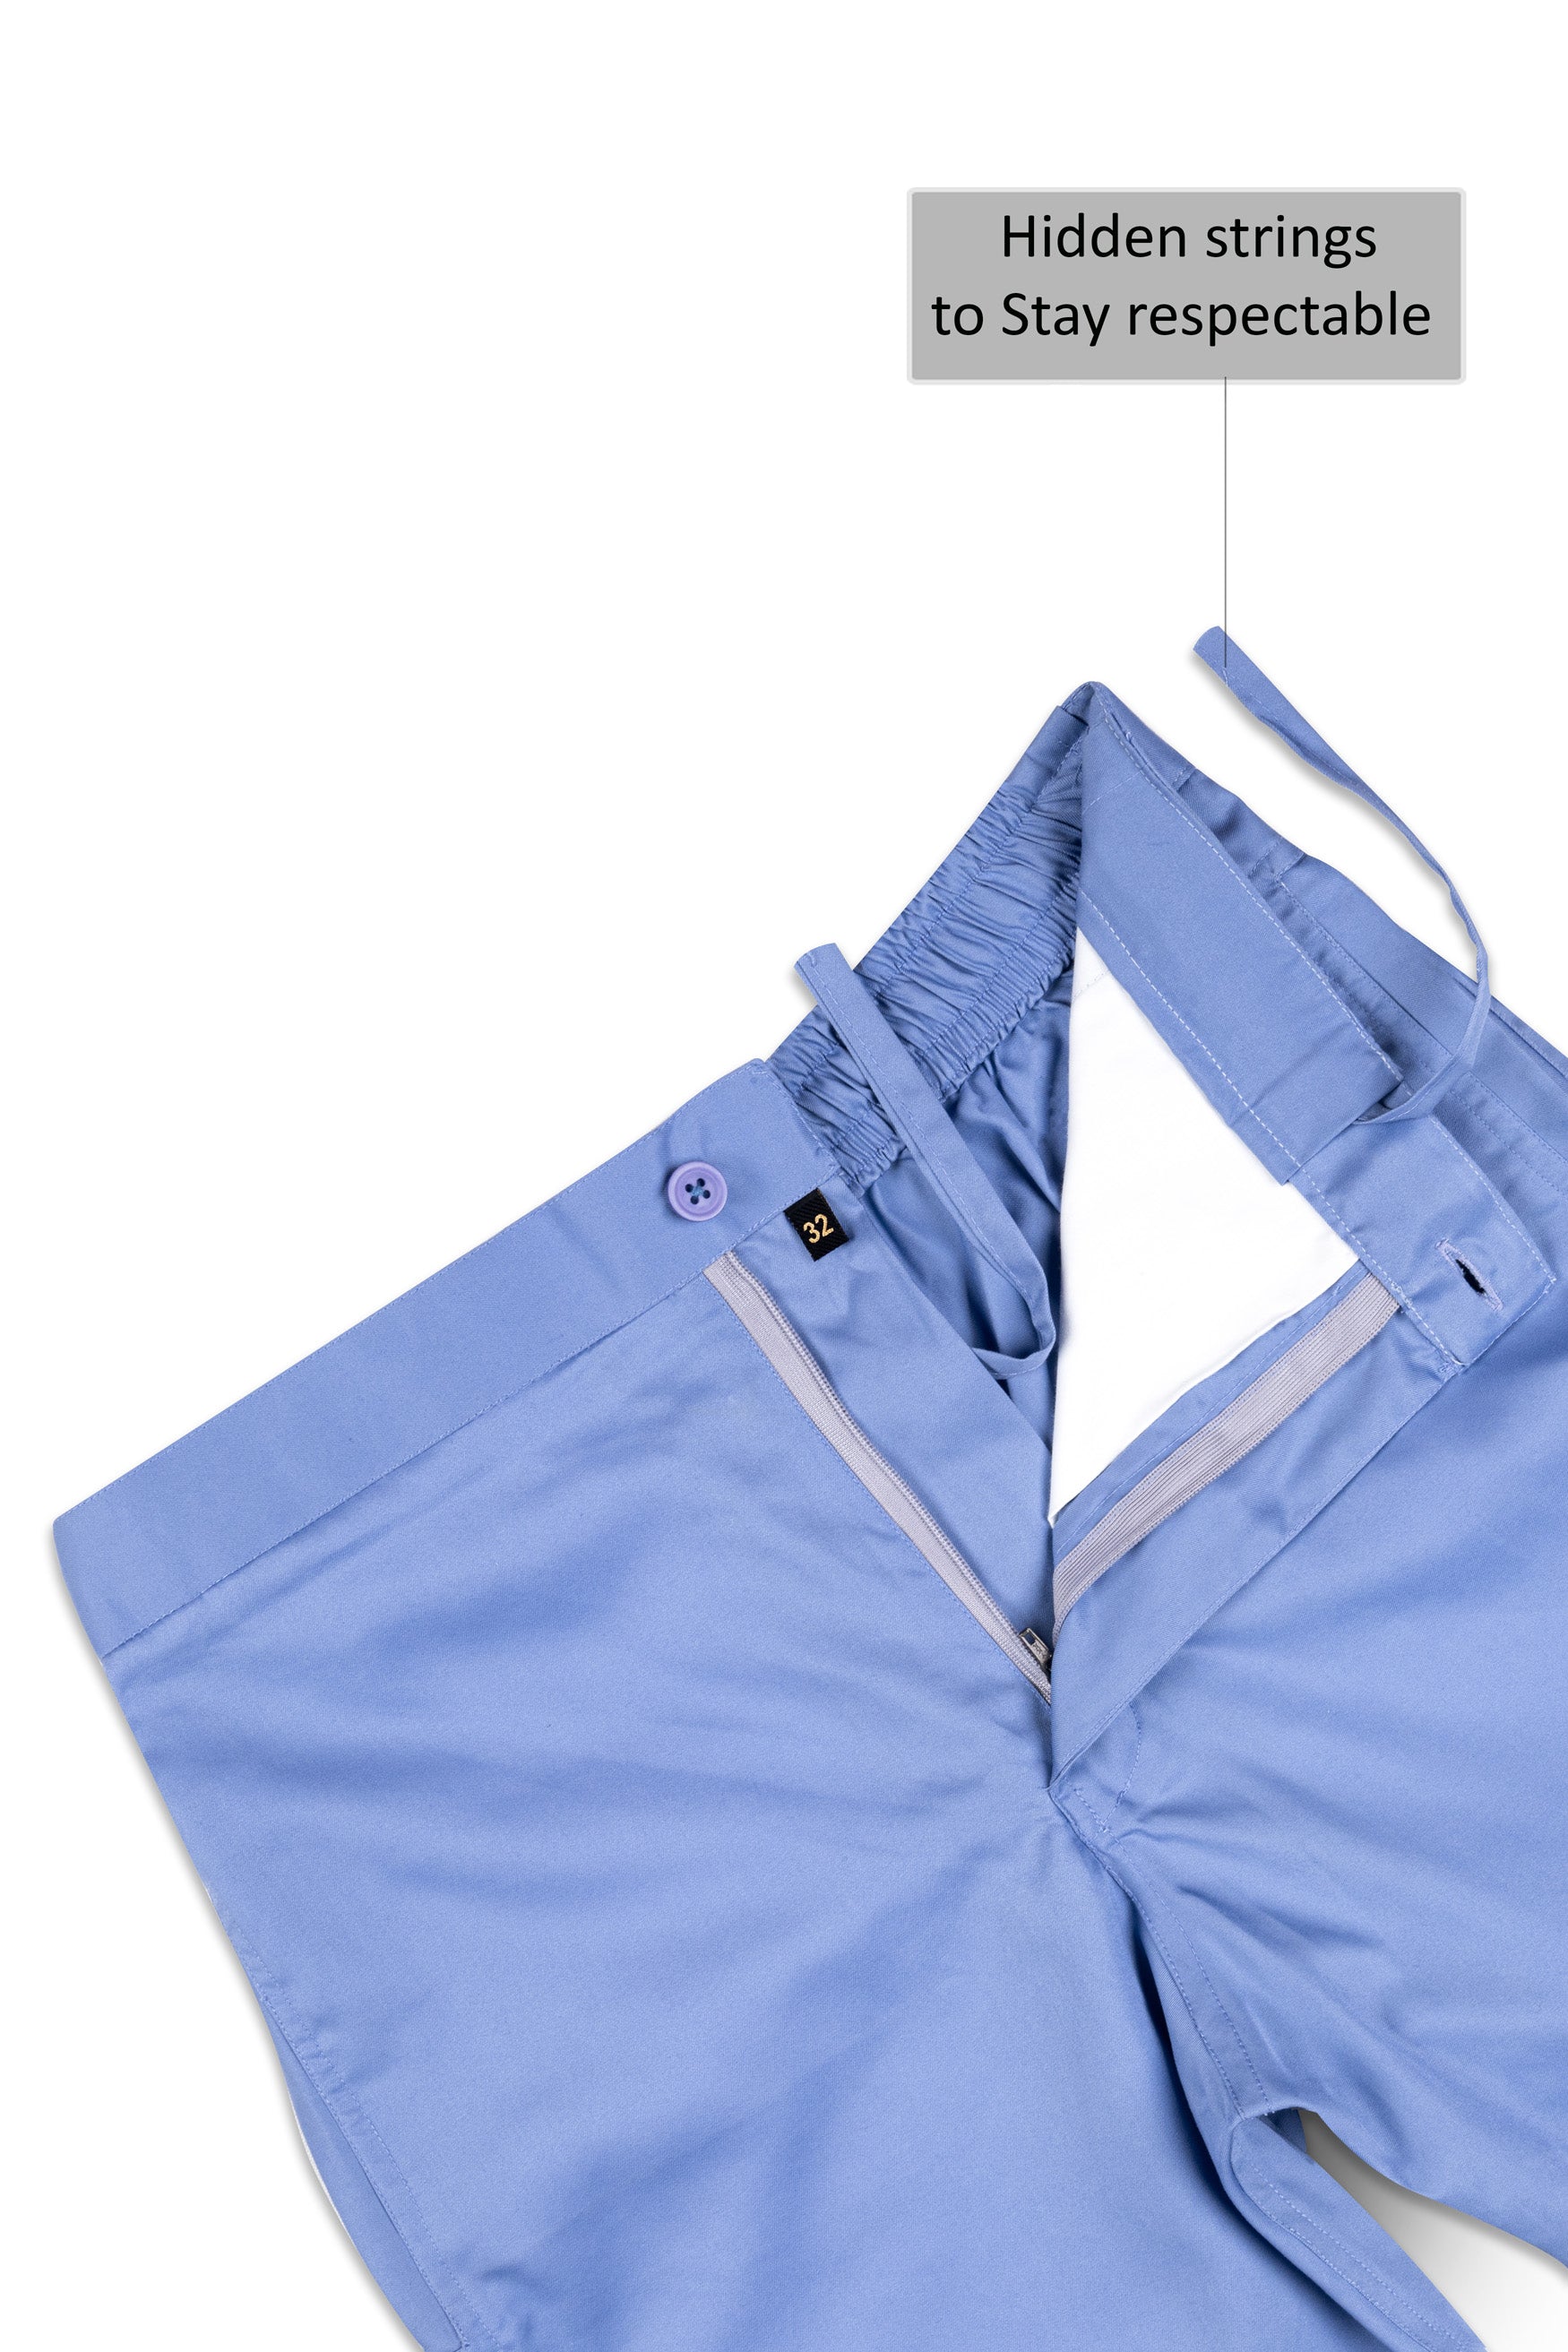 Periwinkle Blue Twill Premium Cotton Shorts SR405-28, SR405-30, SR405-32, SR405-34, SR405-36, SR405-38, SR405-40, SR405-42, SR405-44